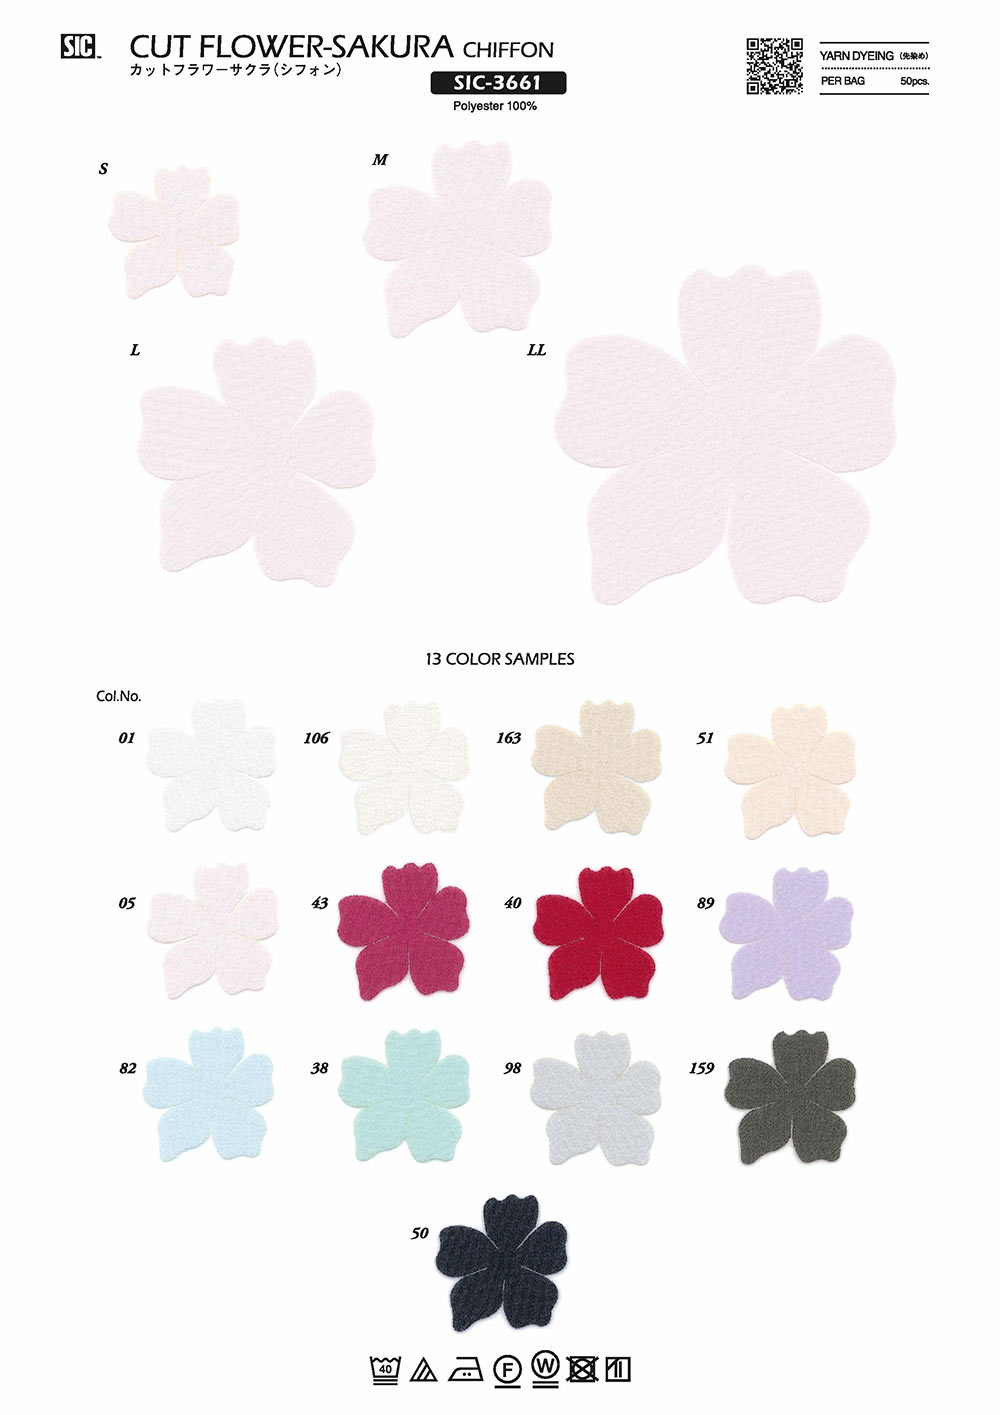 SIC-3661 Cut Flower Sakura (Chiffon)[Produtos Diversos E Outros] SHINDO(SIC)